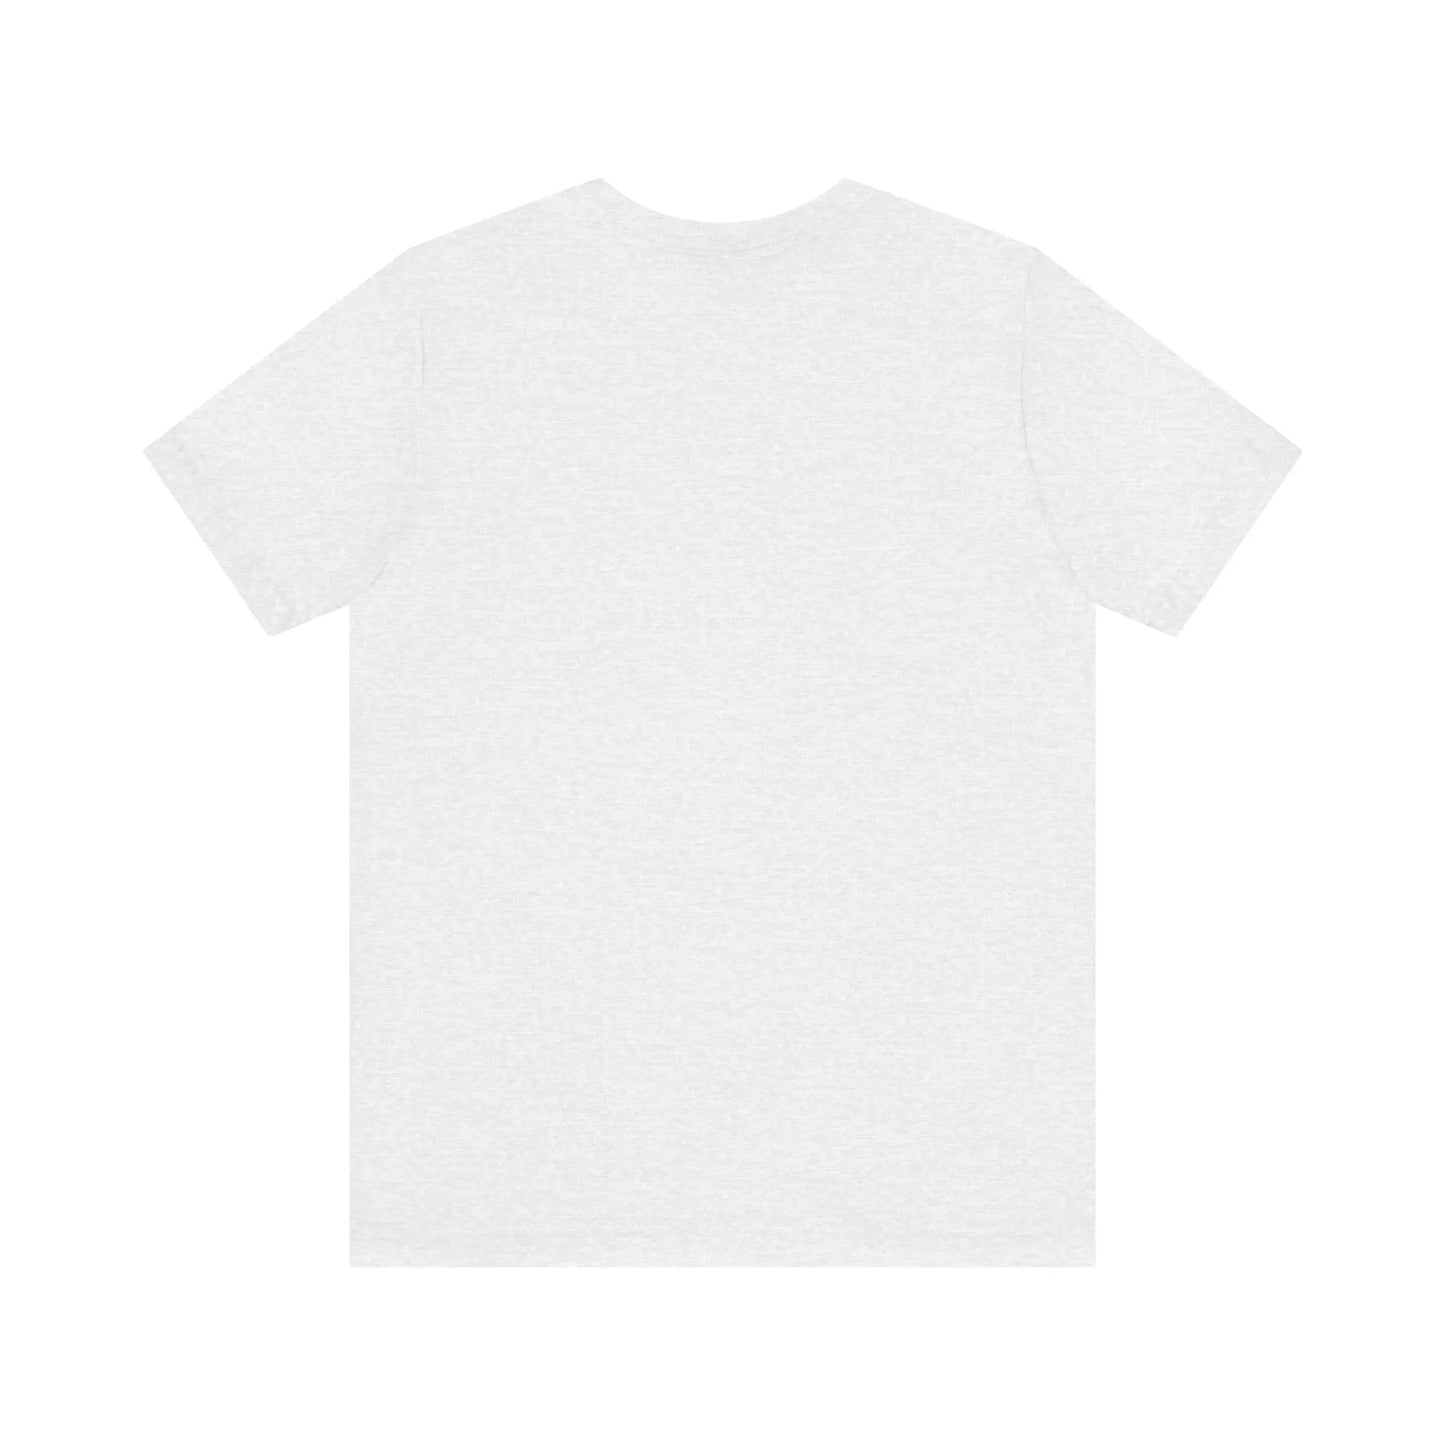 Not Perfect T-Shirt Printify Pikolelie (pee-koh-lay-lee) Activewear T-Shirt